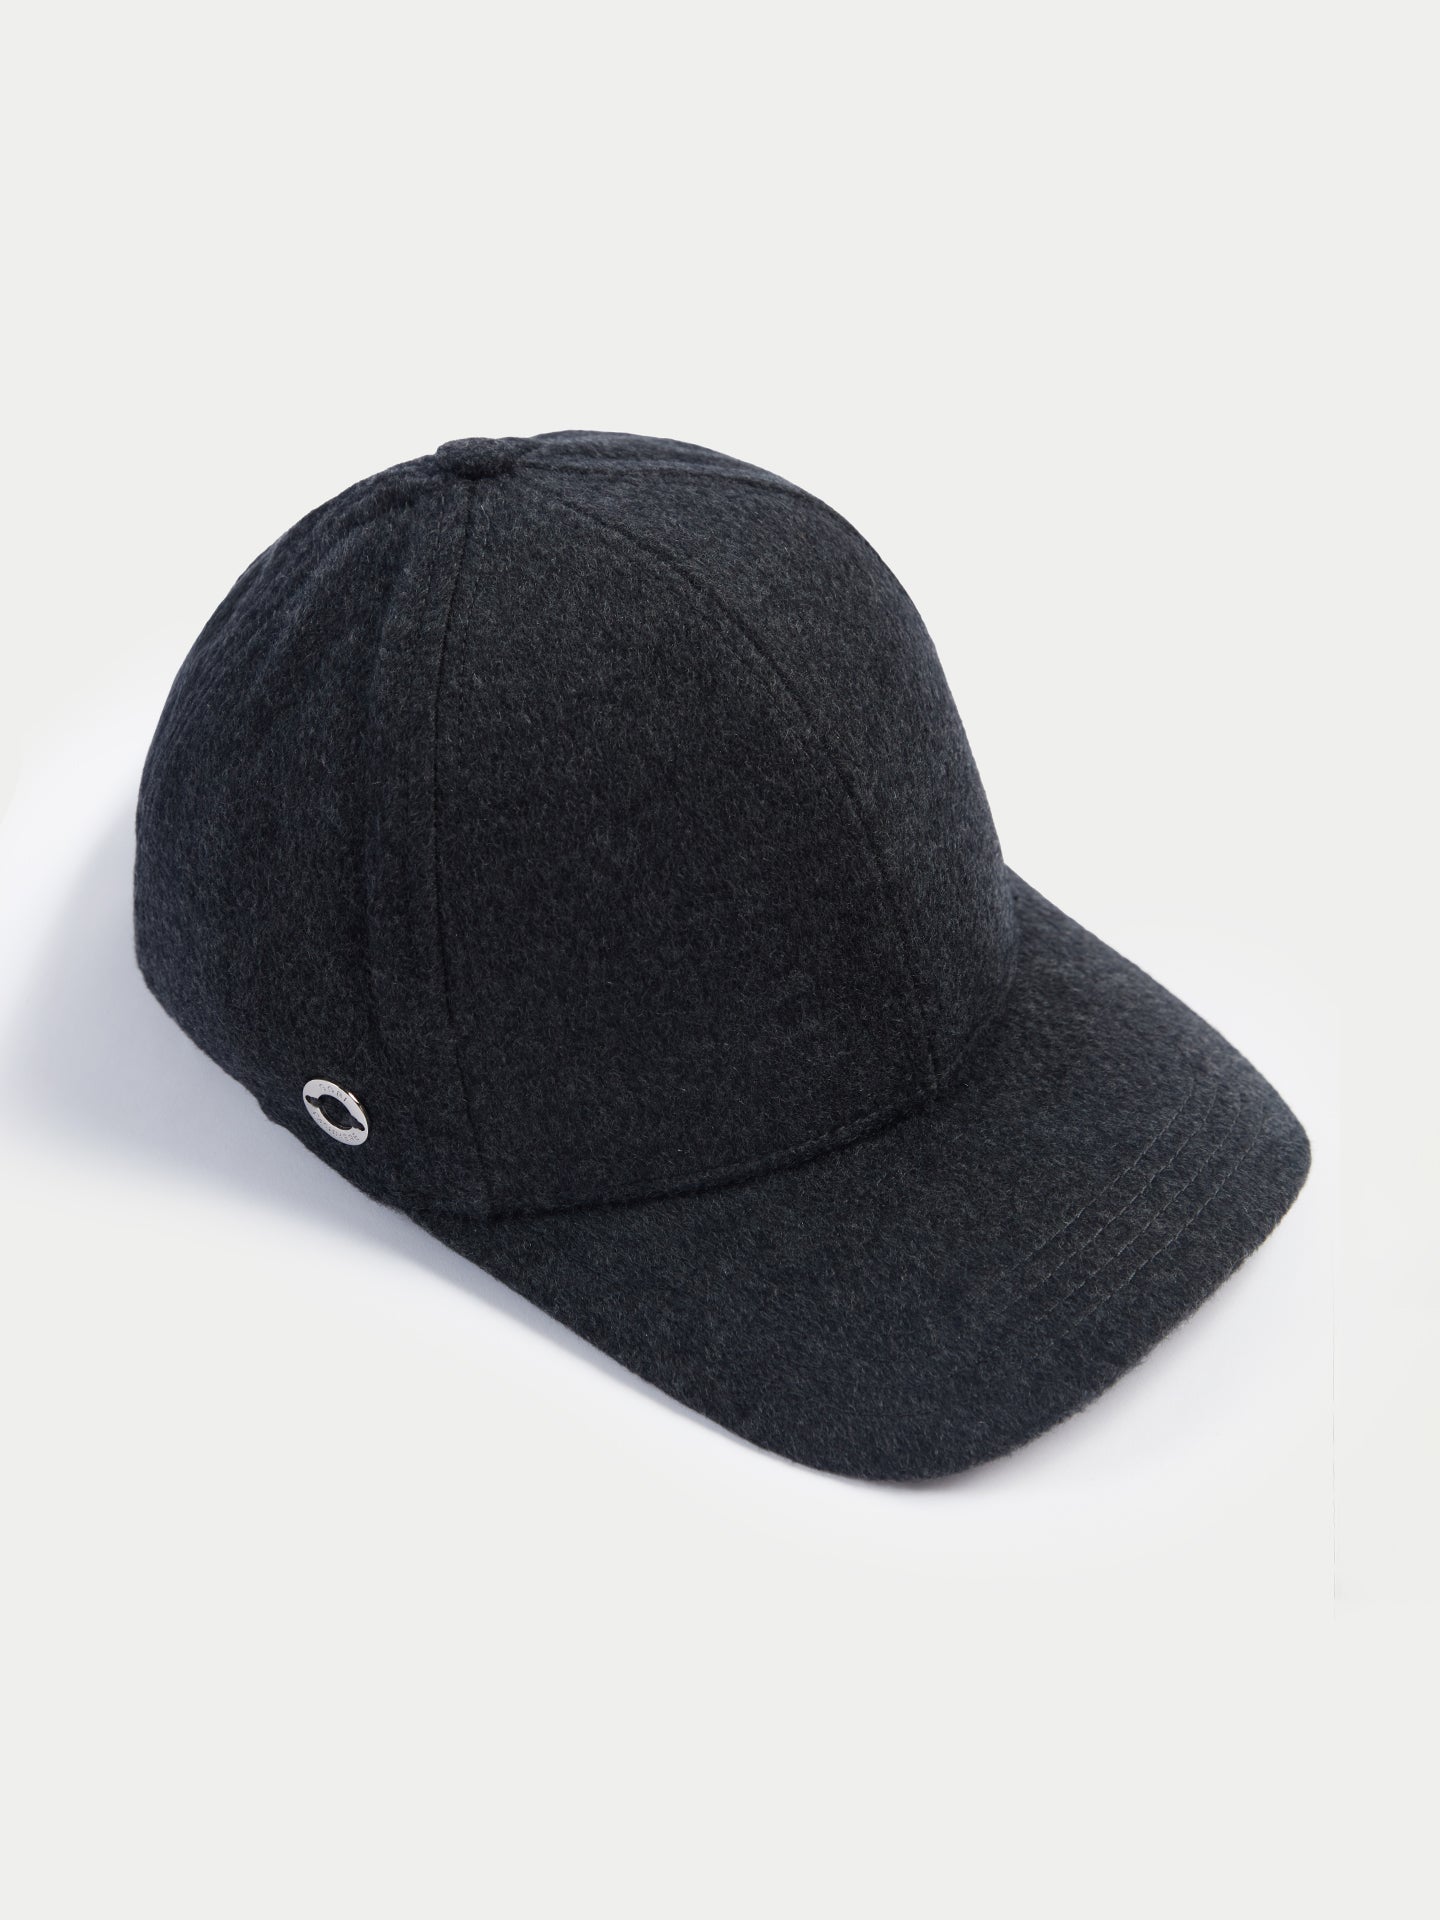 GOBI Cashmere - Cashmere Accessories - Cashmere Hat - Cashmere Cap